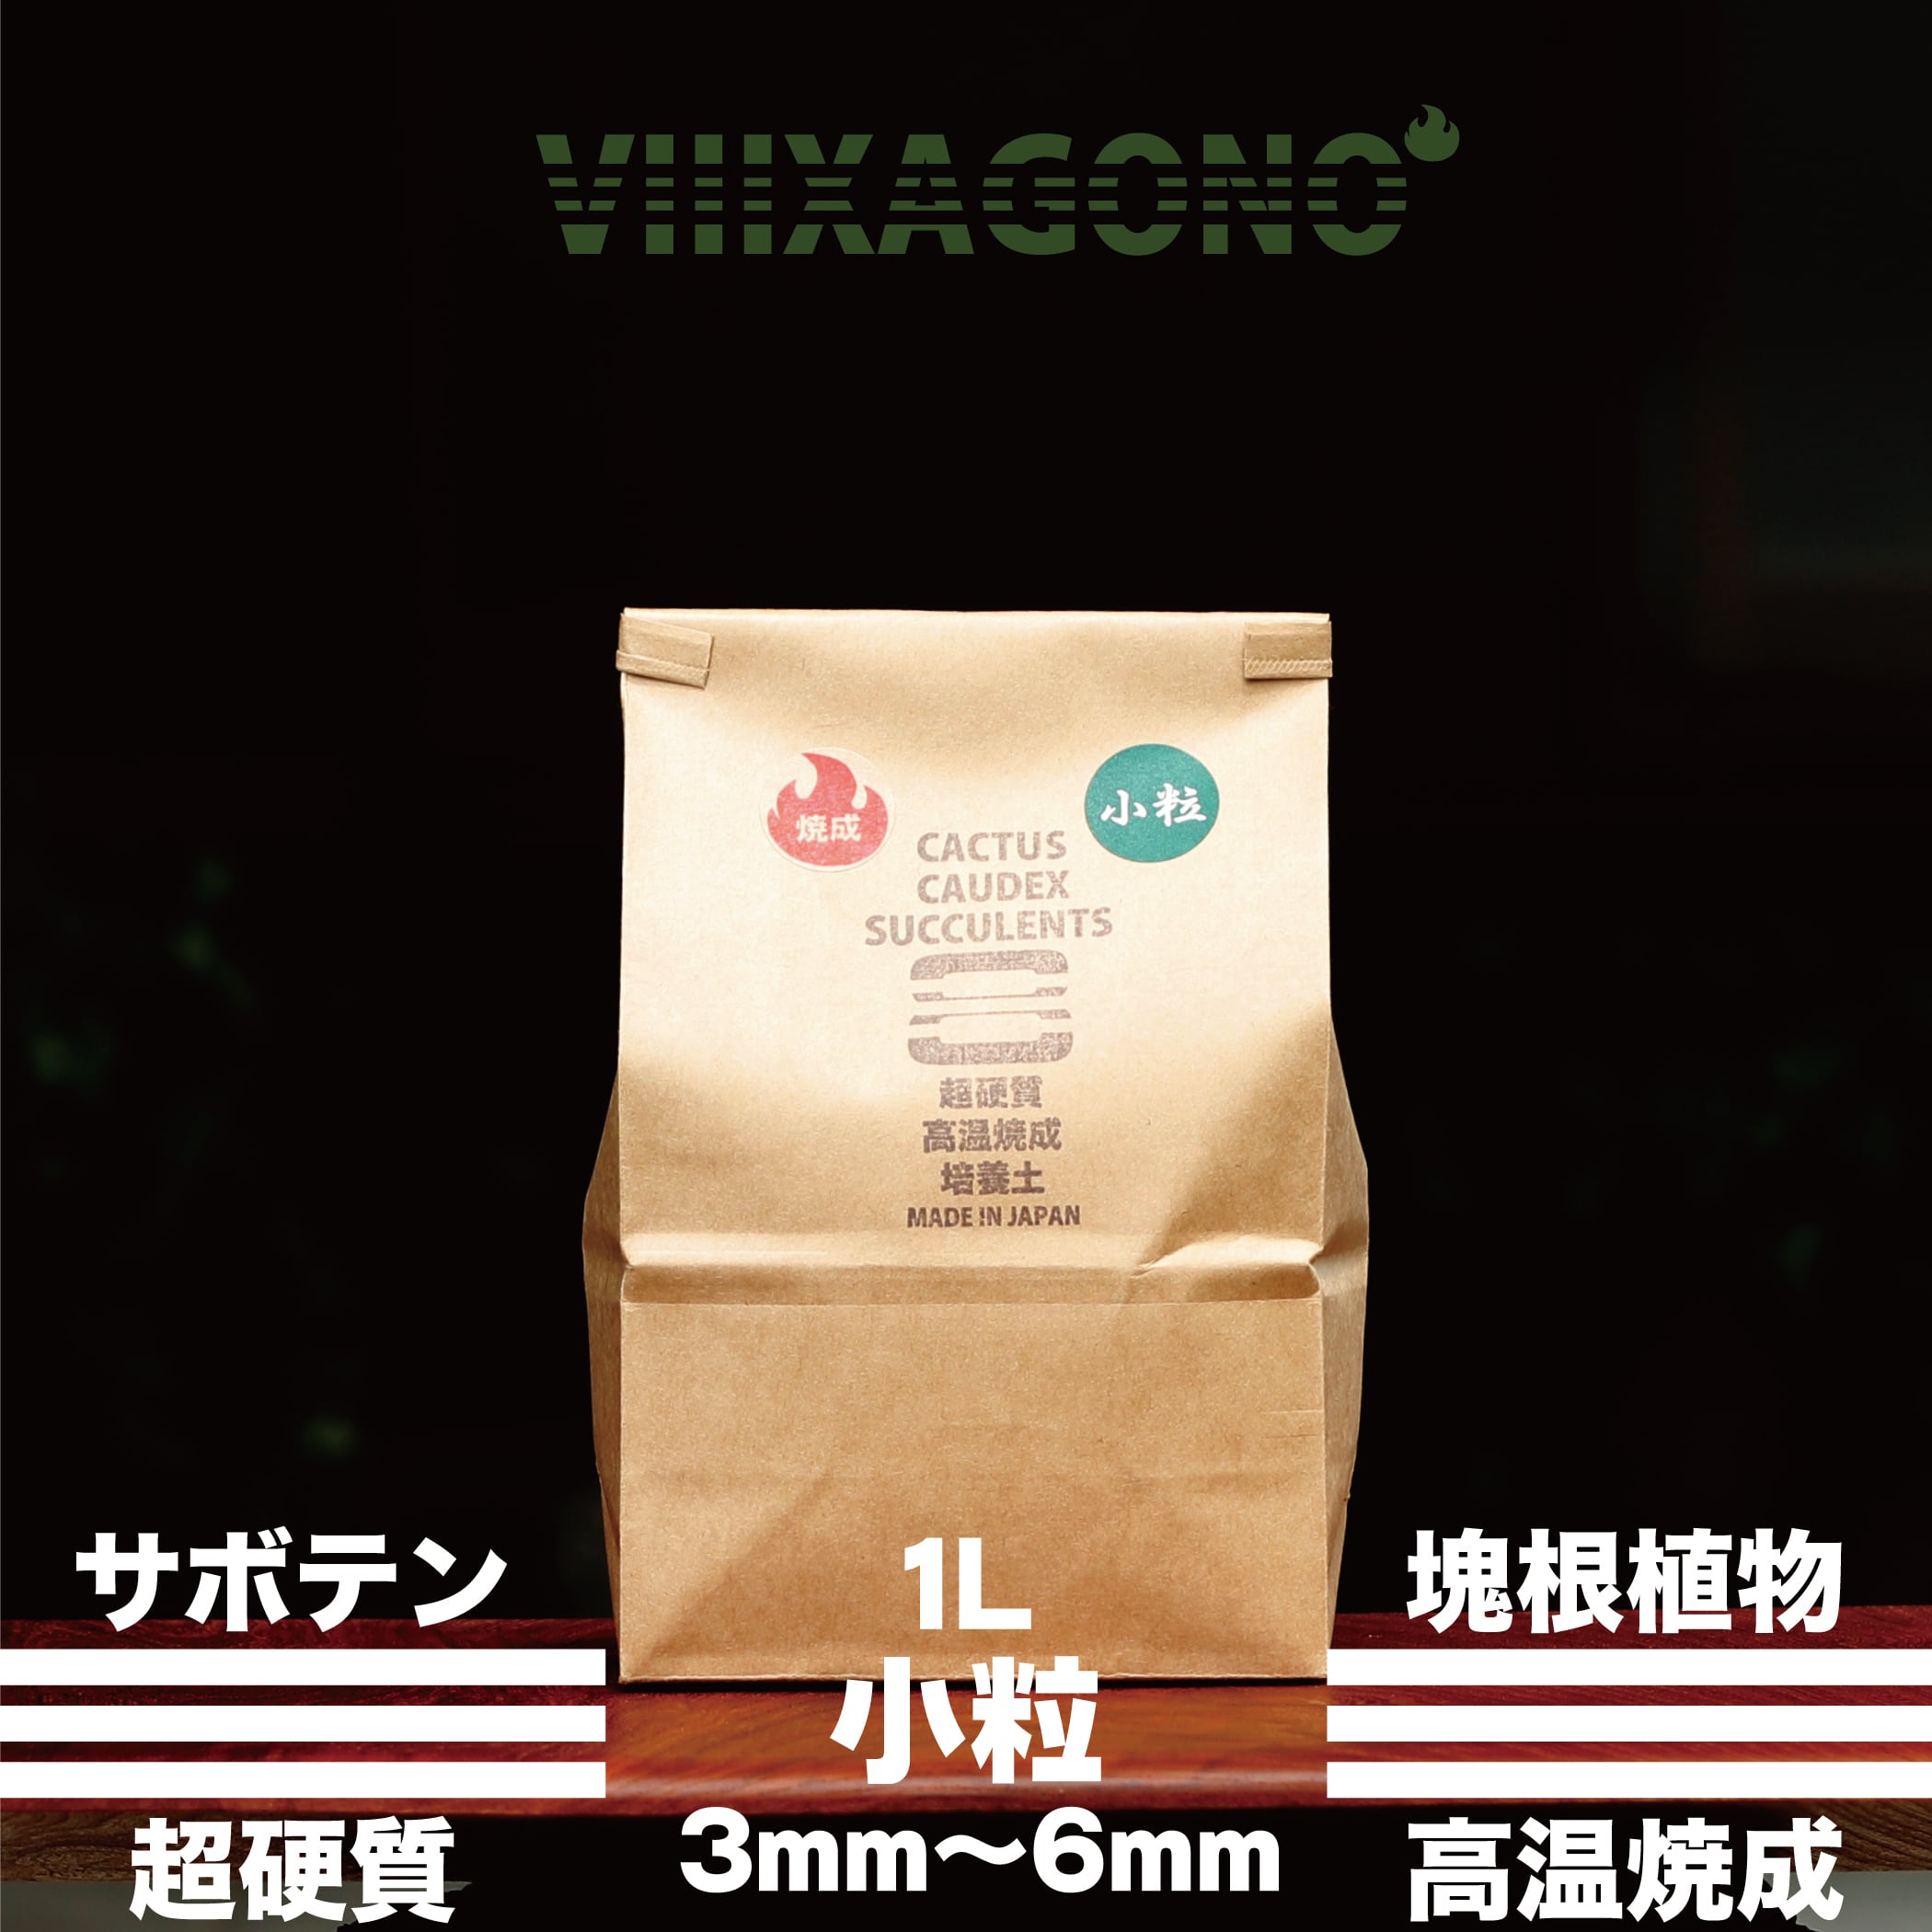 【送料無料】VIIIXAGONO 超硬質焼成培養土 小粒 20L 3mm-6mm